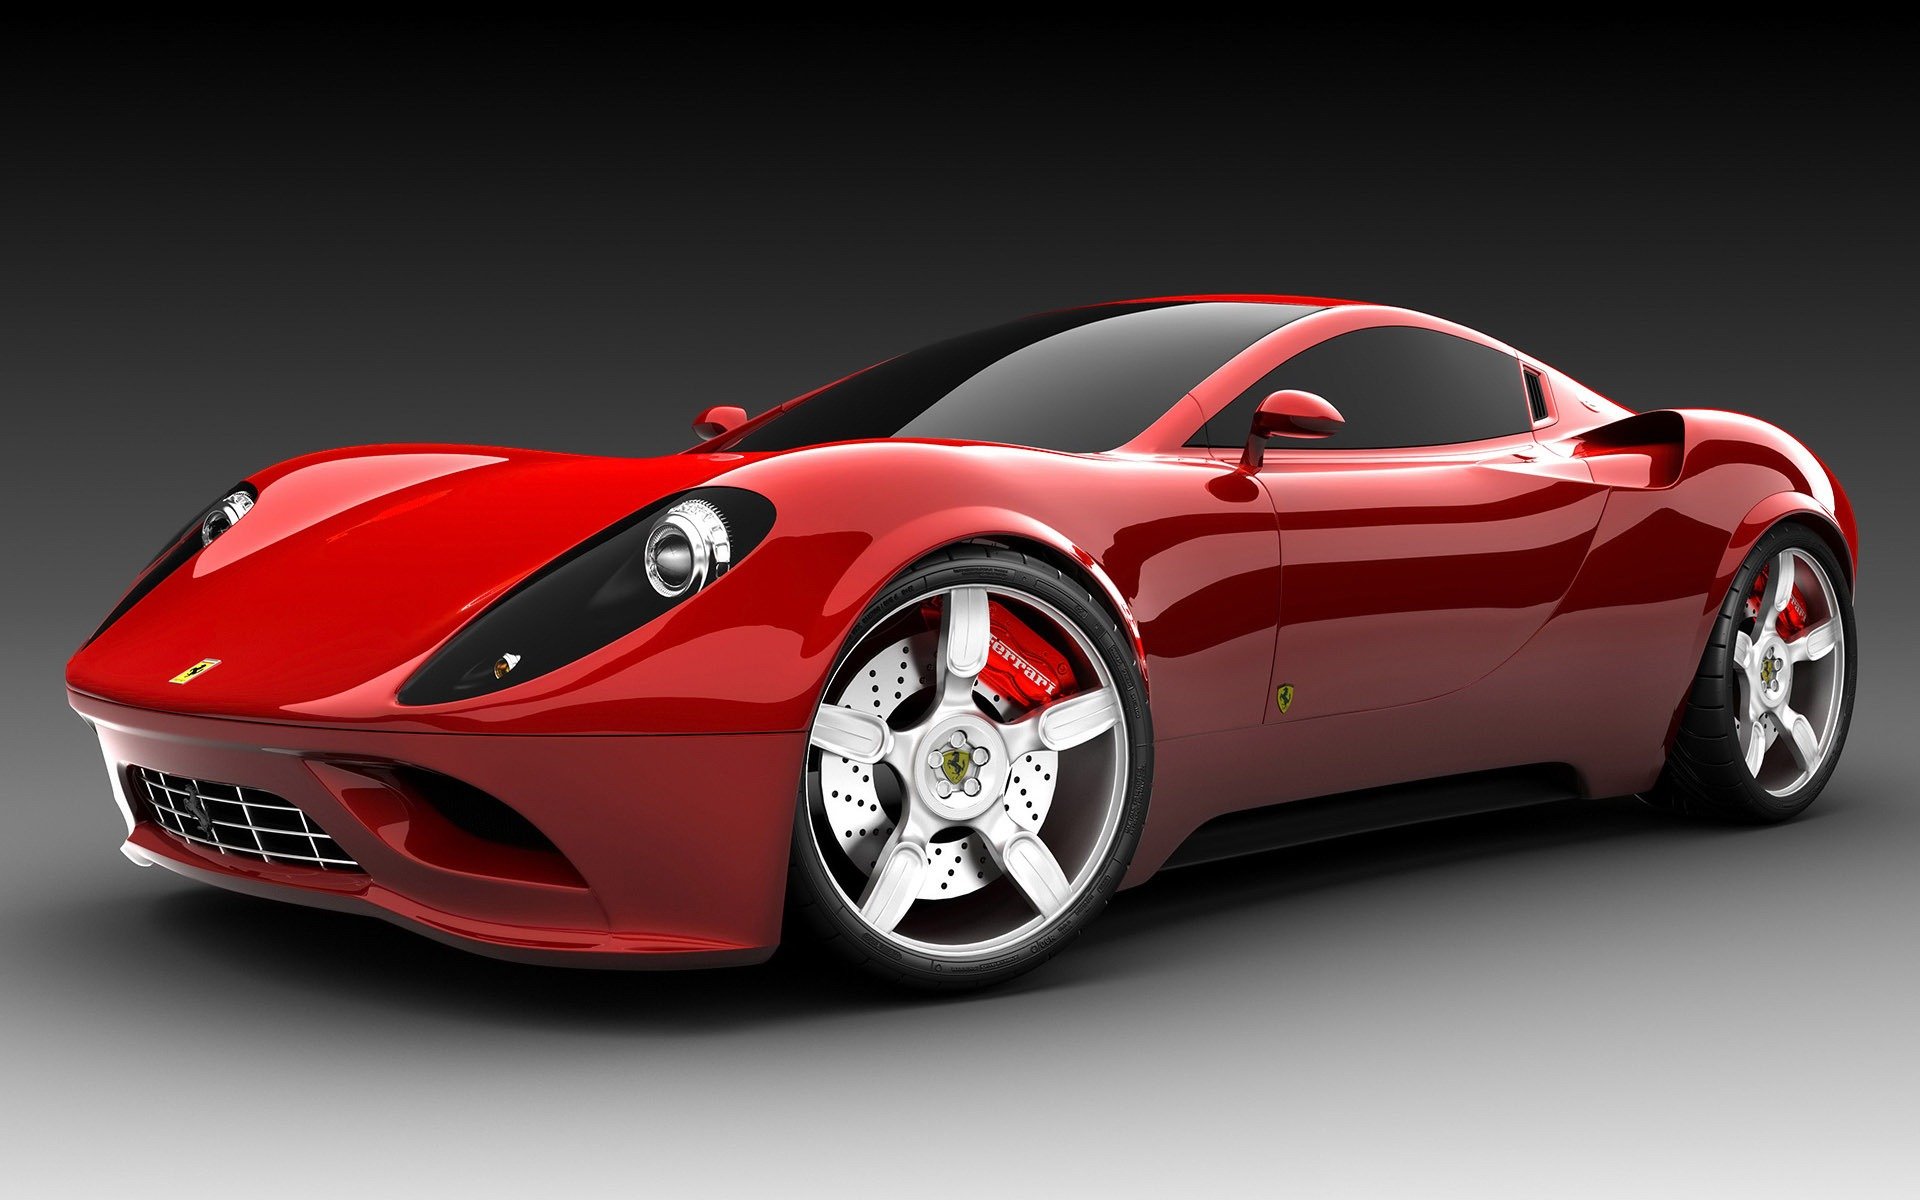 Ferrari car desktop wallpaper hd desktop wallpapers free to download 1920x1200